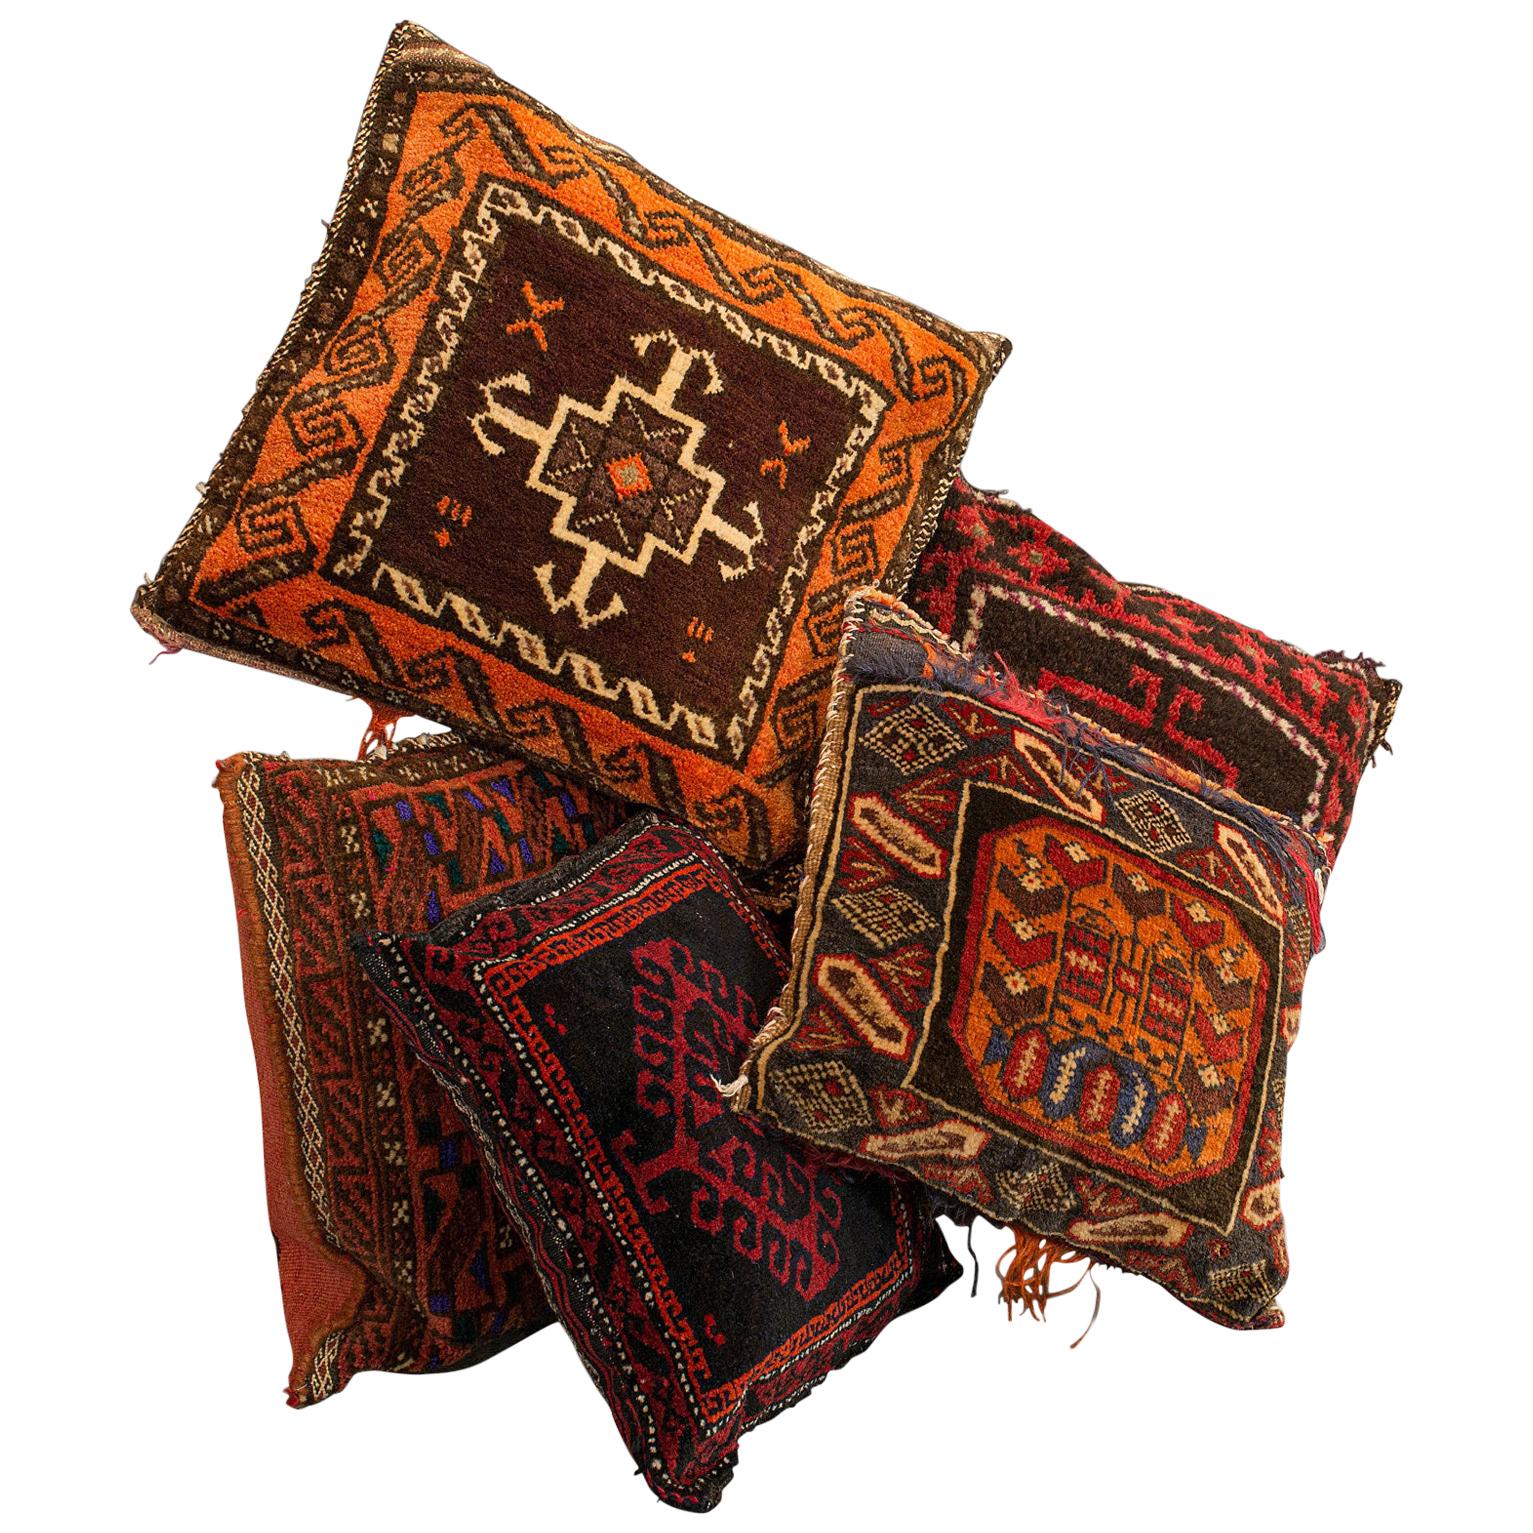 Set of 5, Vintage Kilim Cushions, North African, Camel Bag, Throw Pillows, 1950